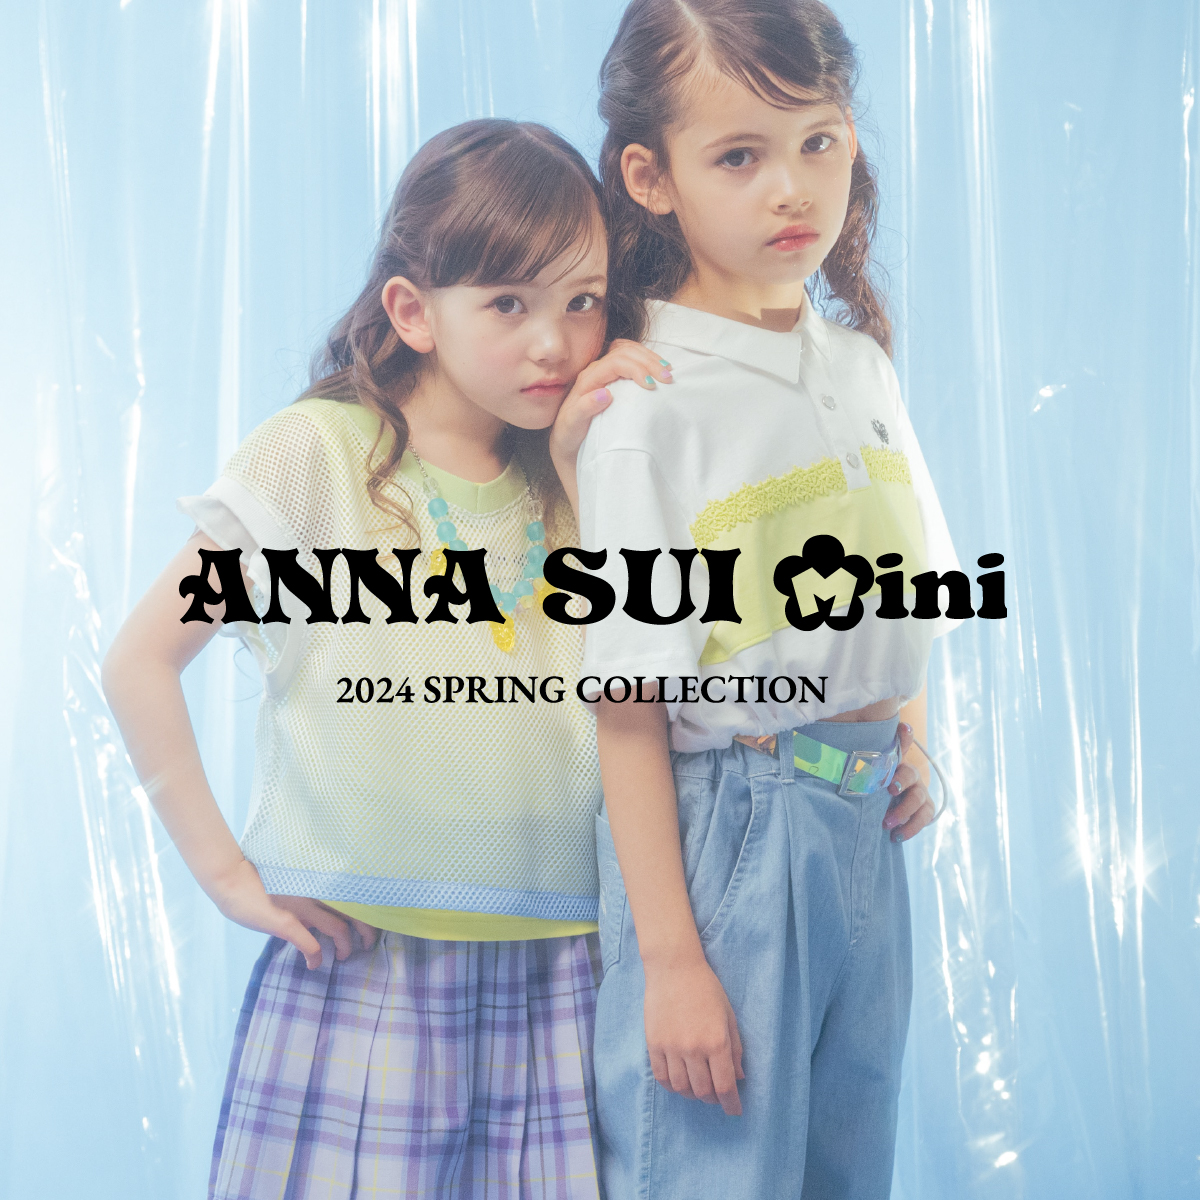 ANNA SUI miniの最新春コレクションをWEB CATALOGからcheck！